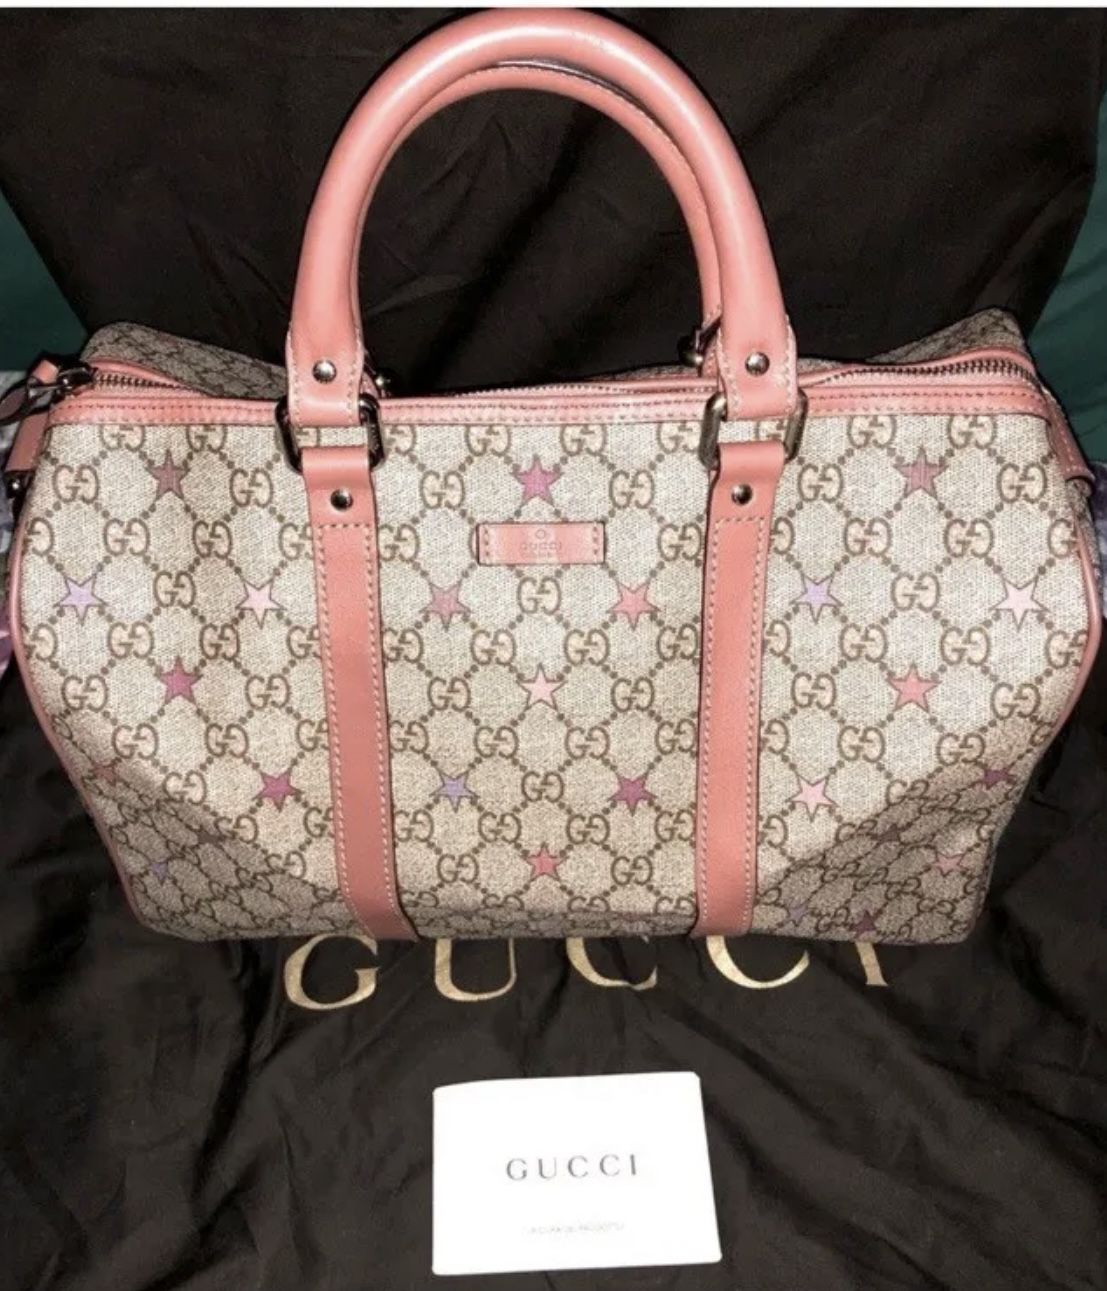 Authentic Gucci GG Supreme Stars Medium Joy Boston Bag $995